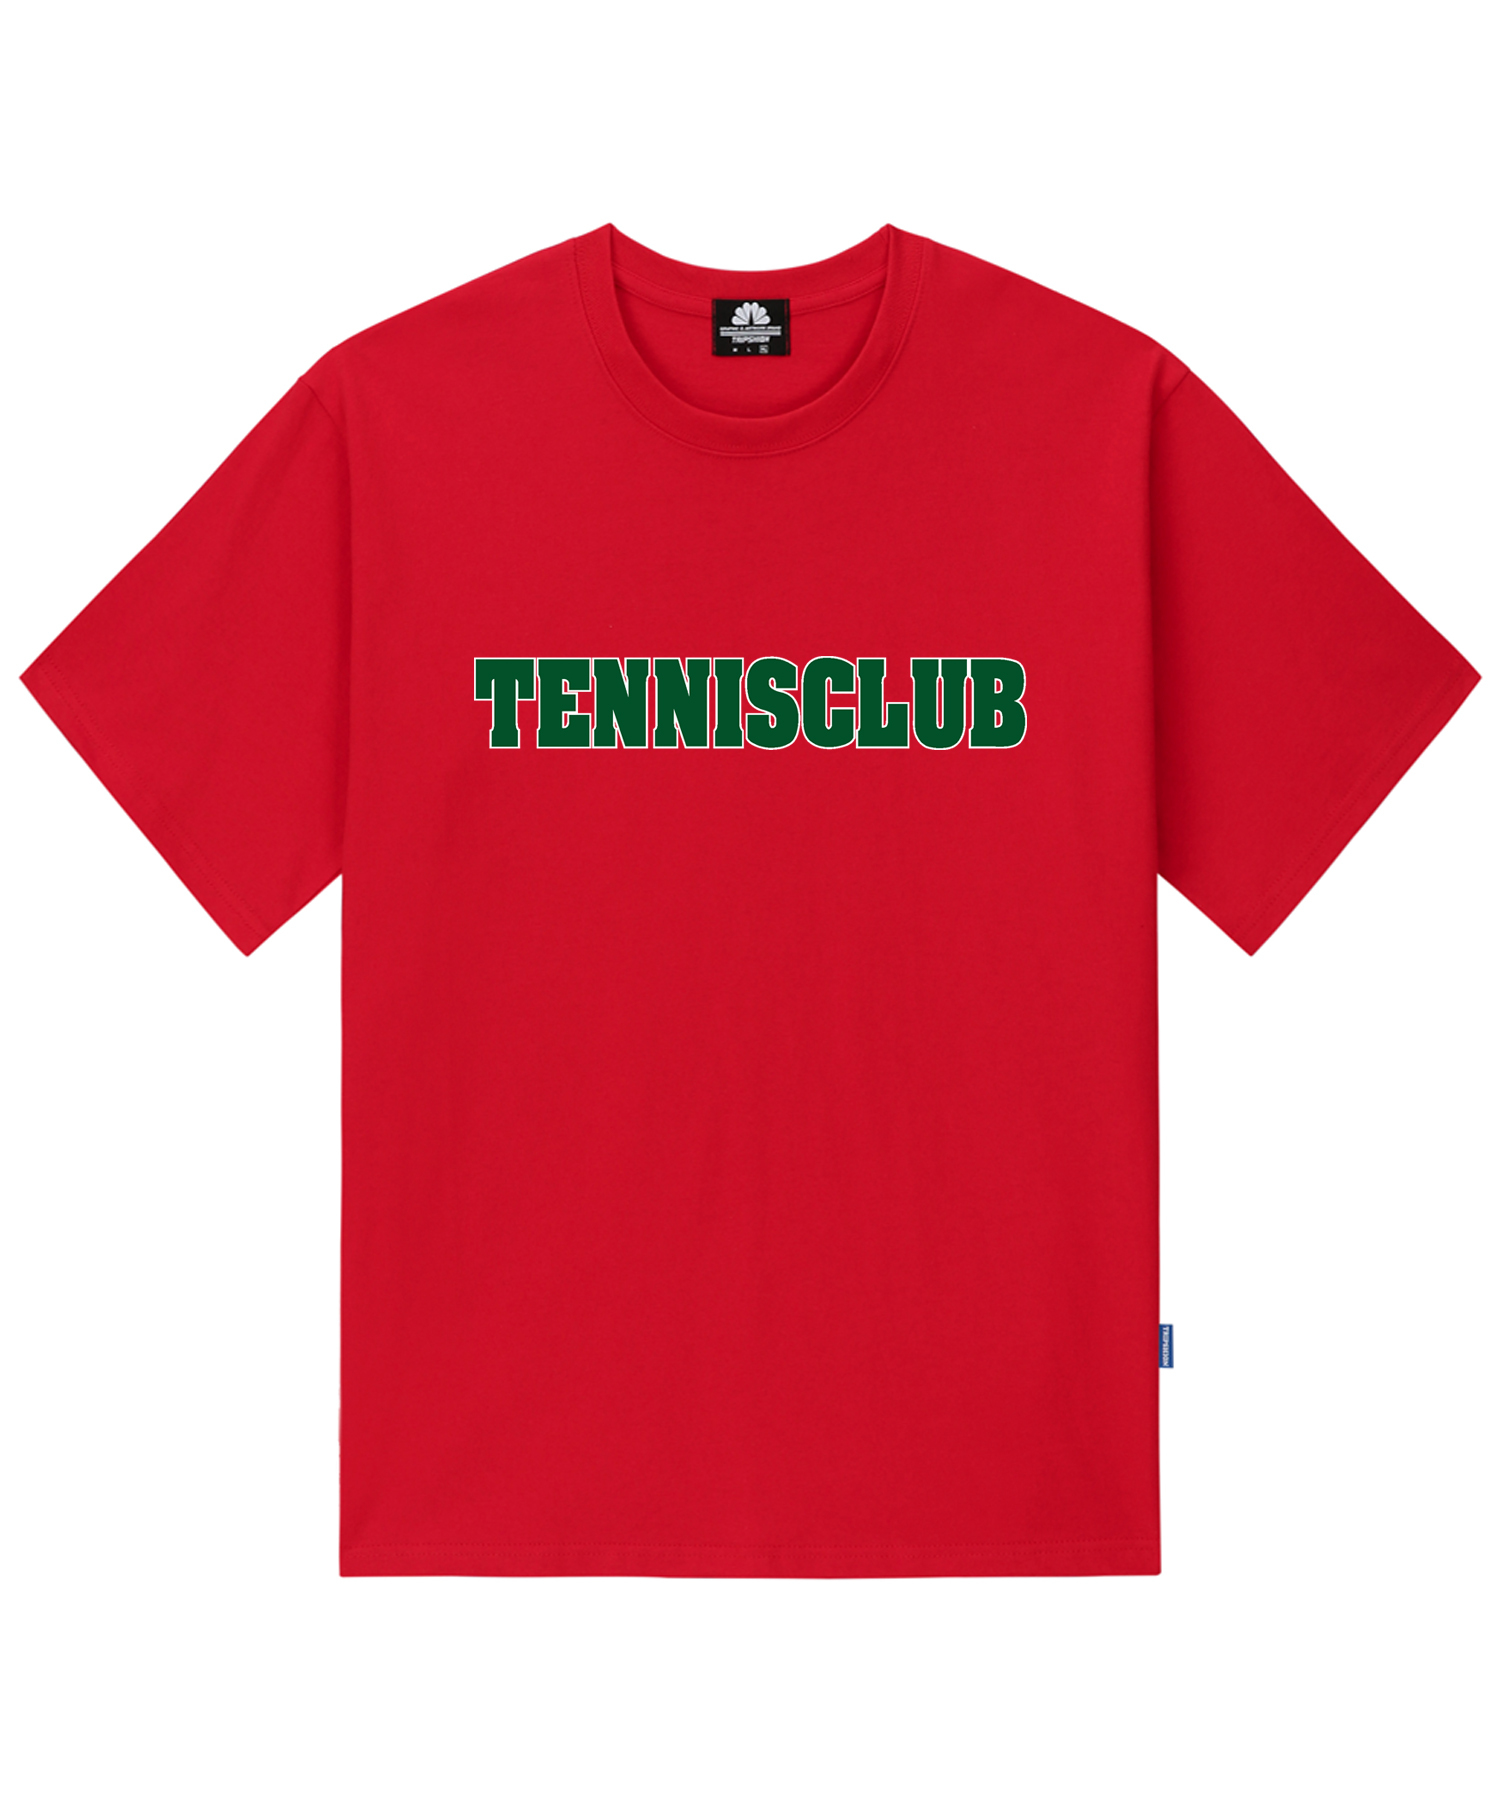 TENNIS CLUB T-SHIRTS - RED